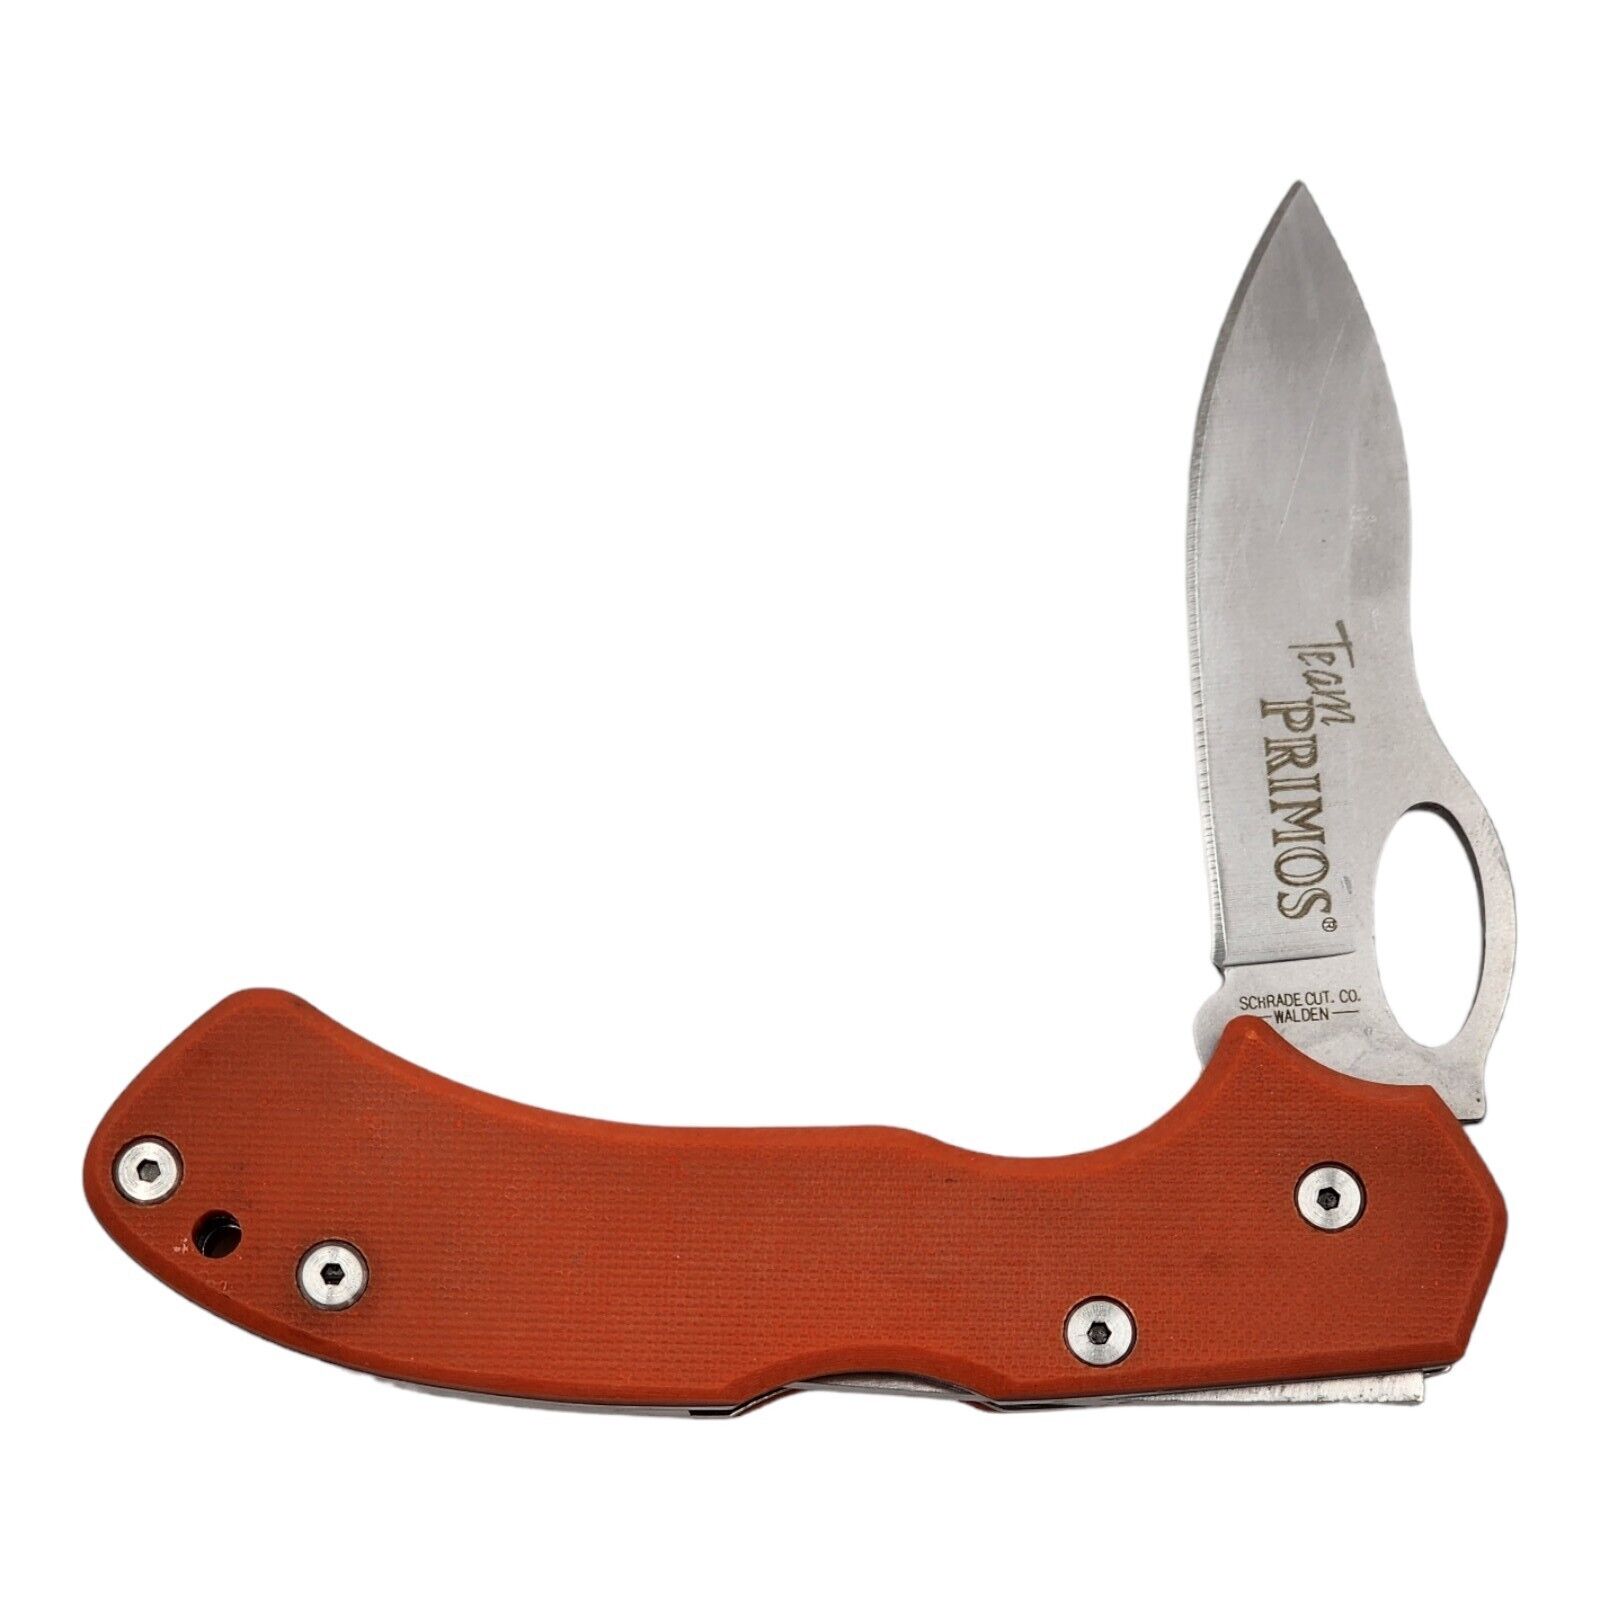 Schrade Cut Co. Walden Team Primos SCPRIM80 Orange Folding Pocket Knife 